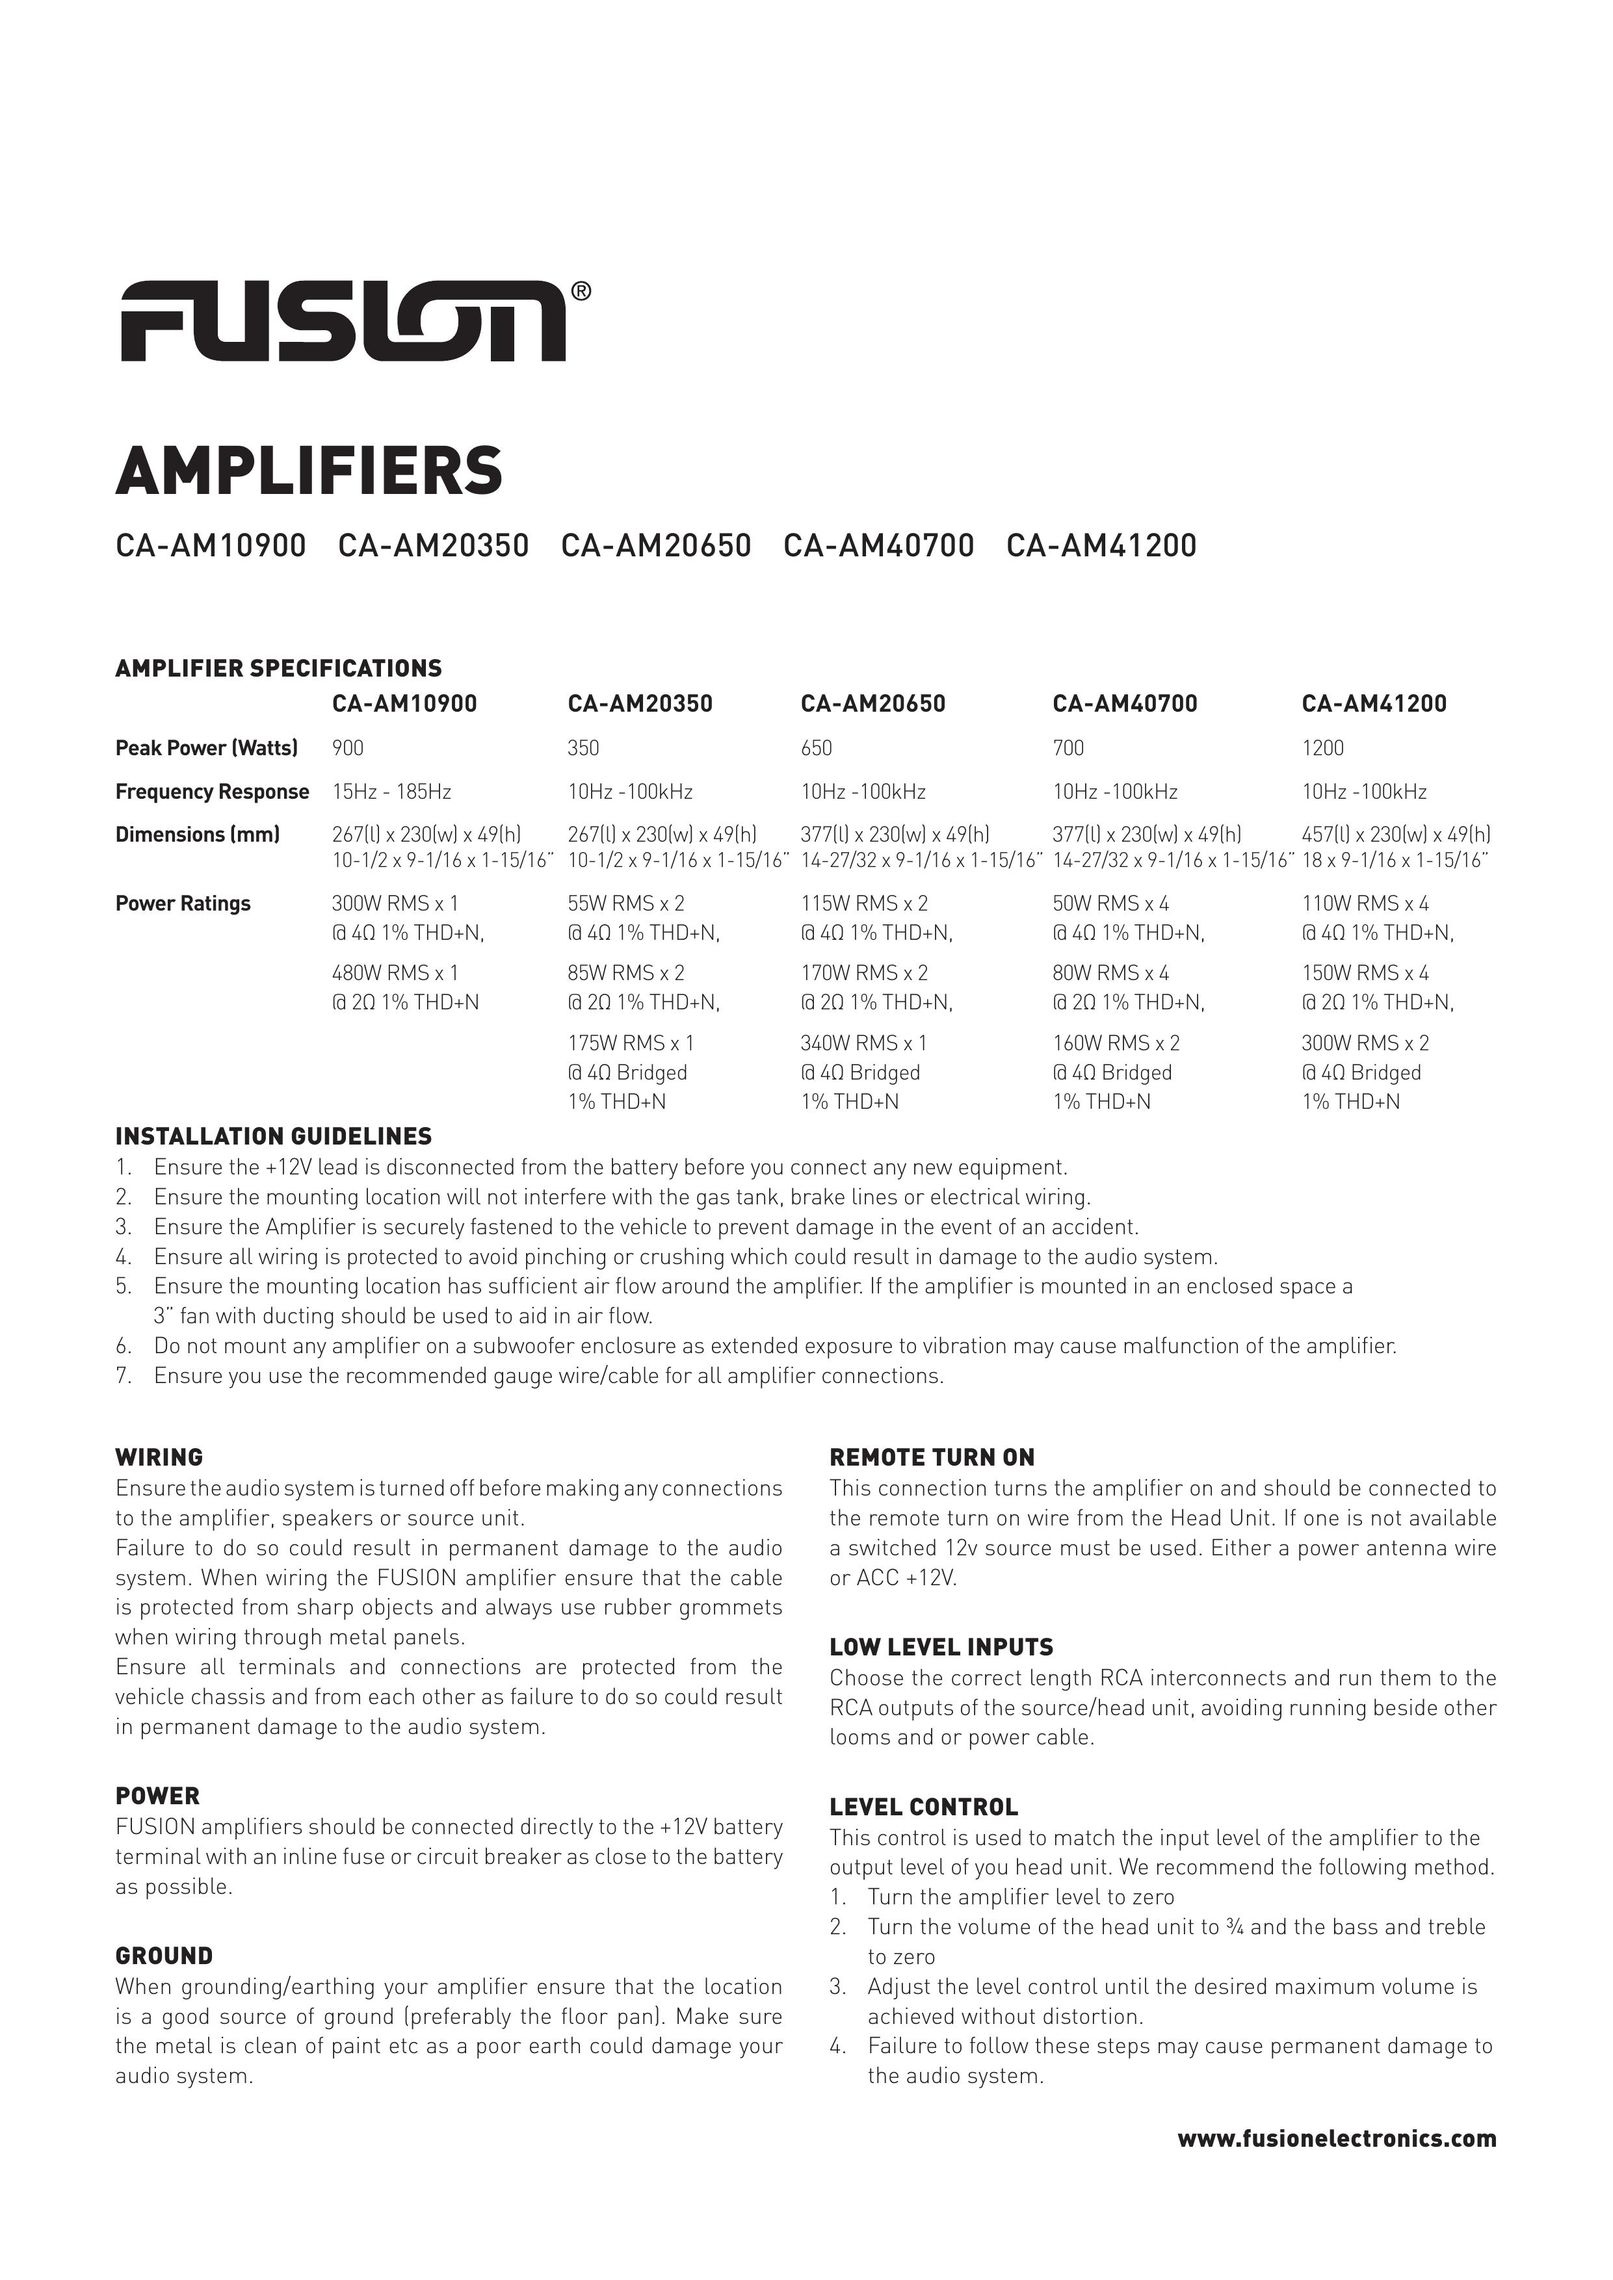 Fusion CA-AM40700 Car Amplifier User Manual